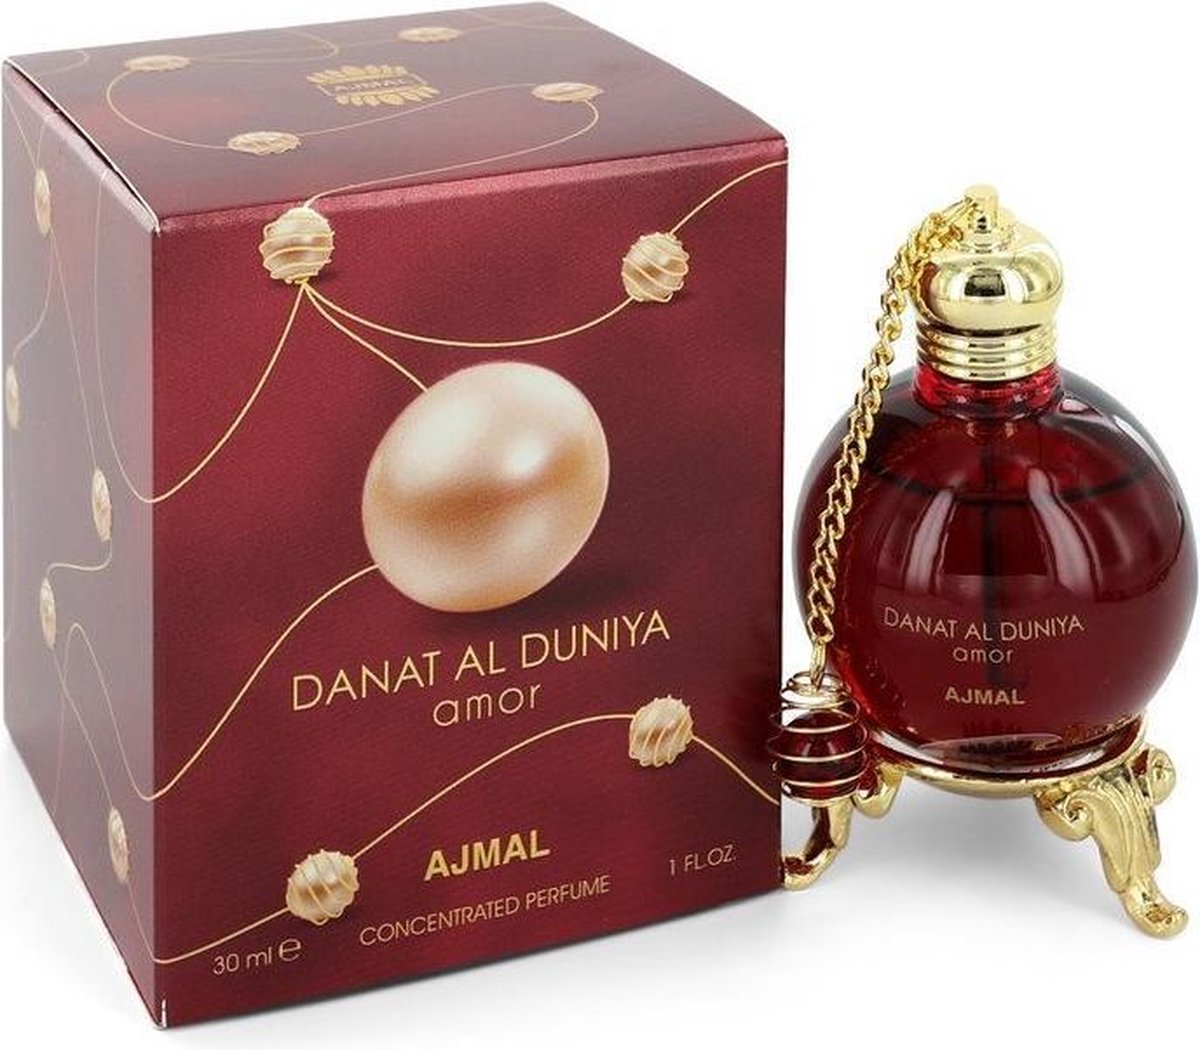 Ajmal Danat Al Duniya Amor by Ajmal 30 ml - Concentrated Perfume